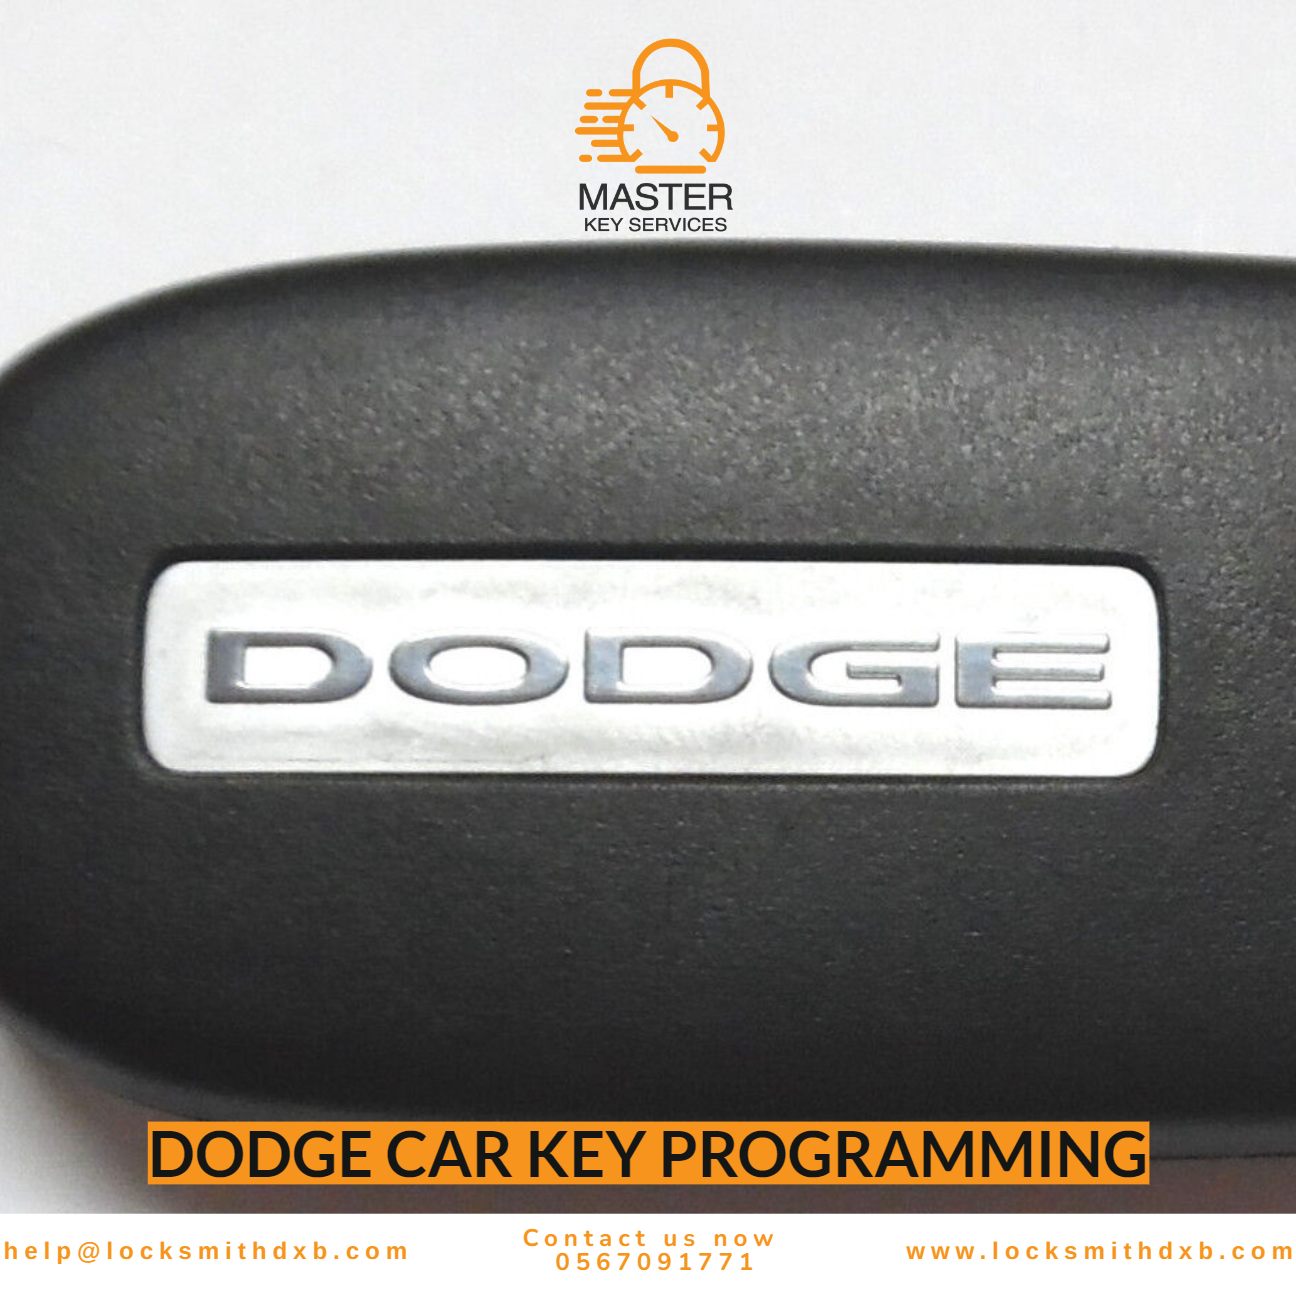 DODGE car key programming